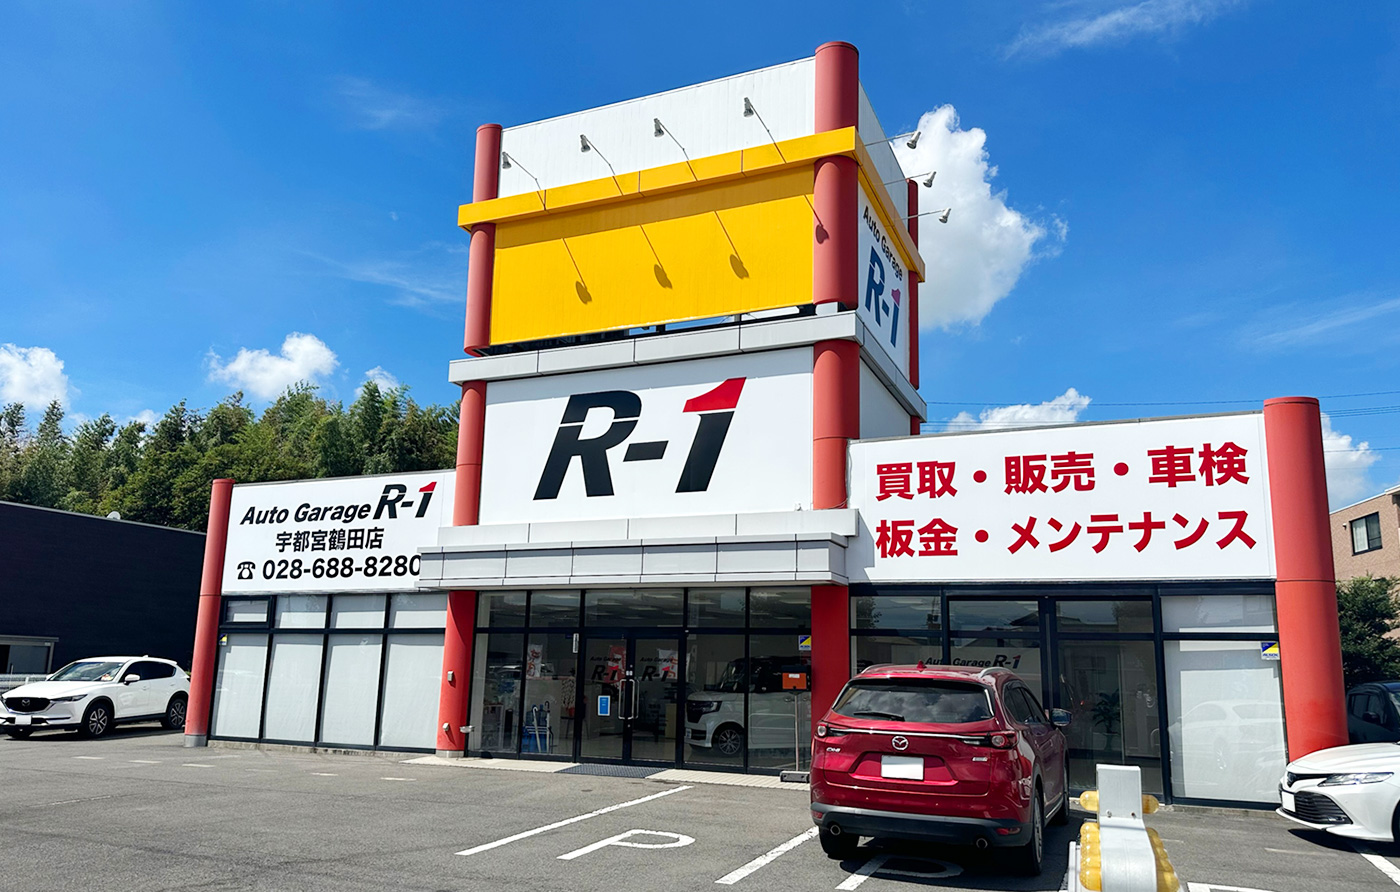 AutoGarage R-1 宇都宮鶴田店